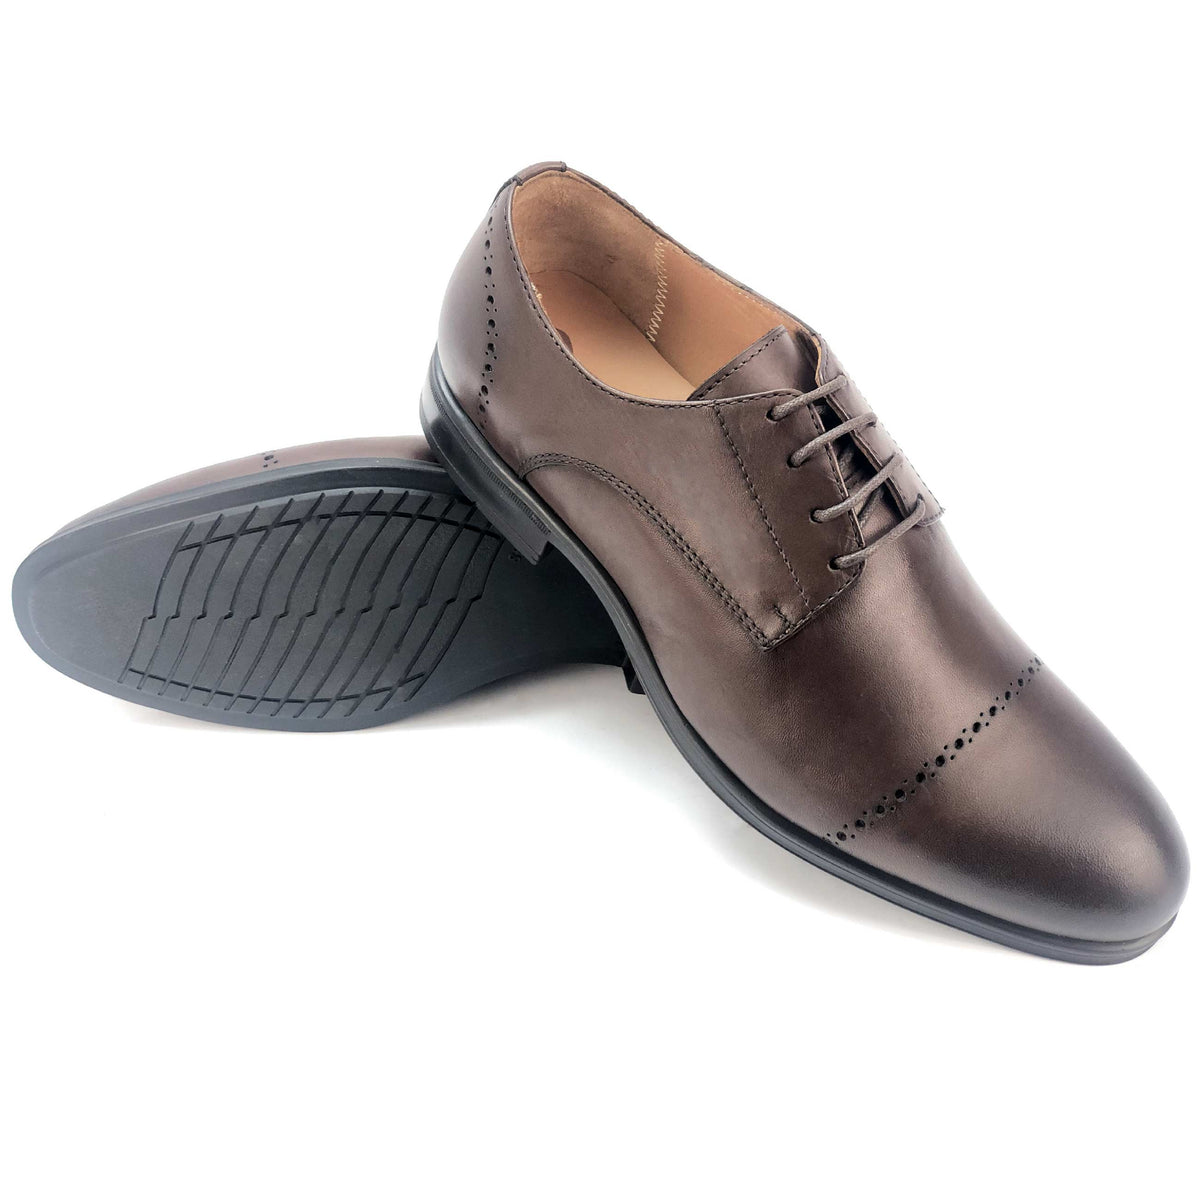 CH0041-015 - Chaussure cuir Marron - deluxe-maroc